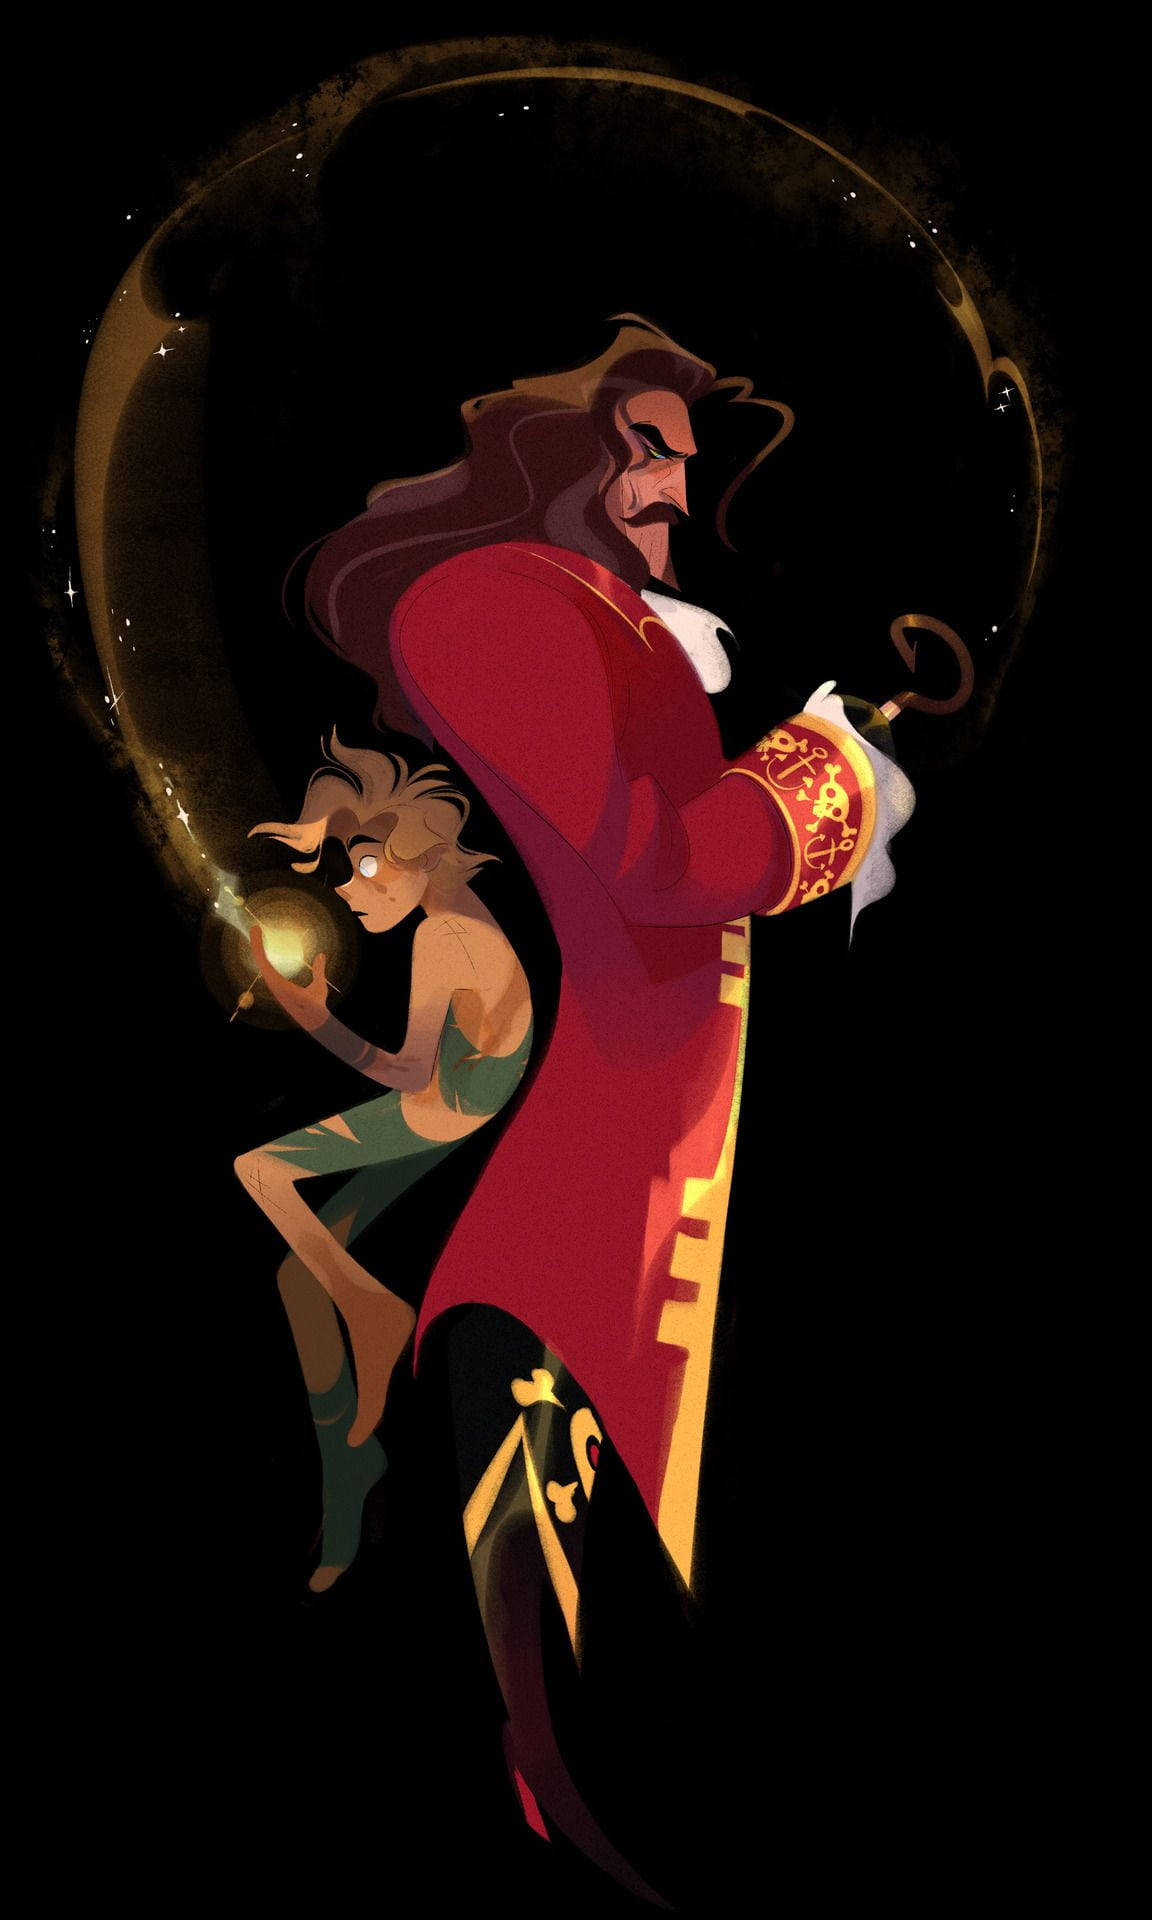 Peter Pan Captain Hook Illustration Background